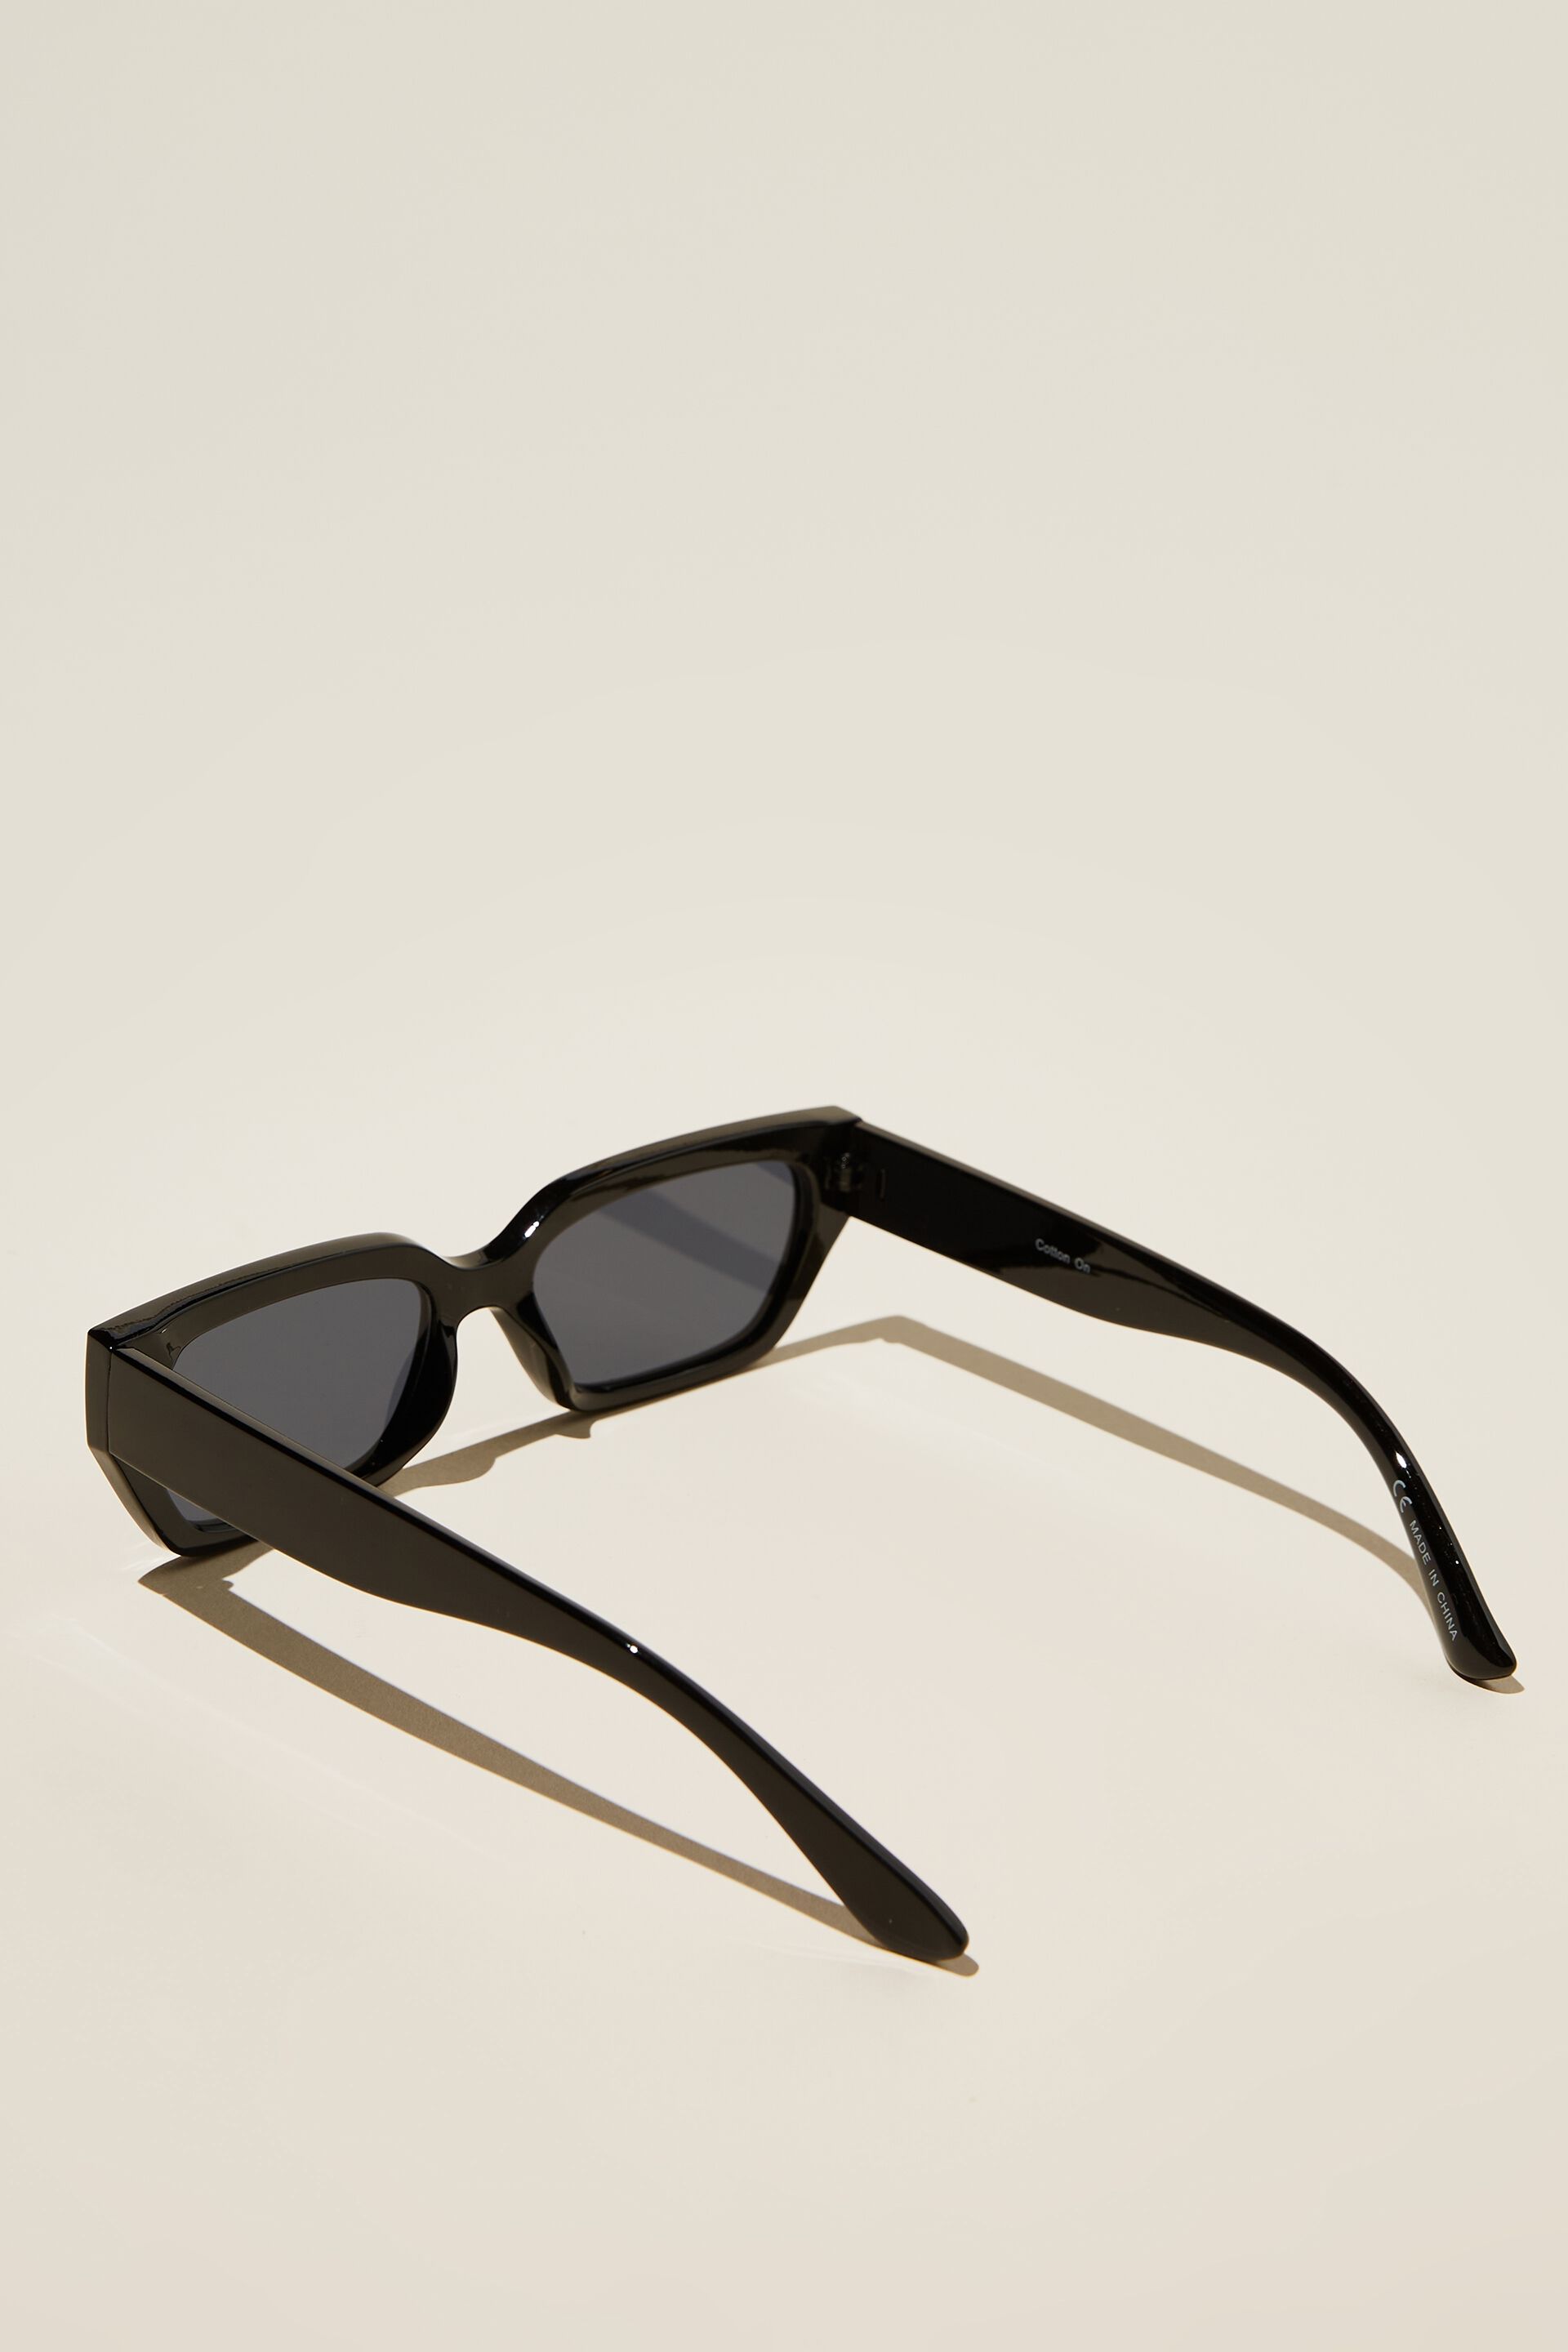 Okuma Polarized Sunglasses Men and Women Driving Hiking Fishing UV400 UV  Protection Glasses - AliExpress